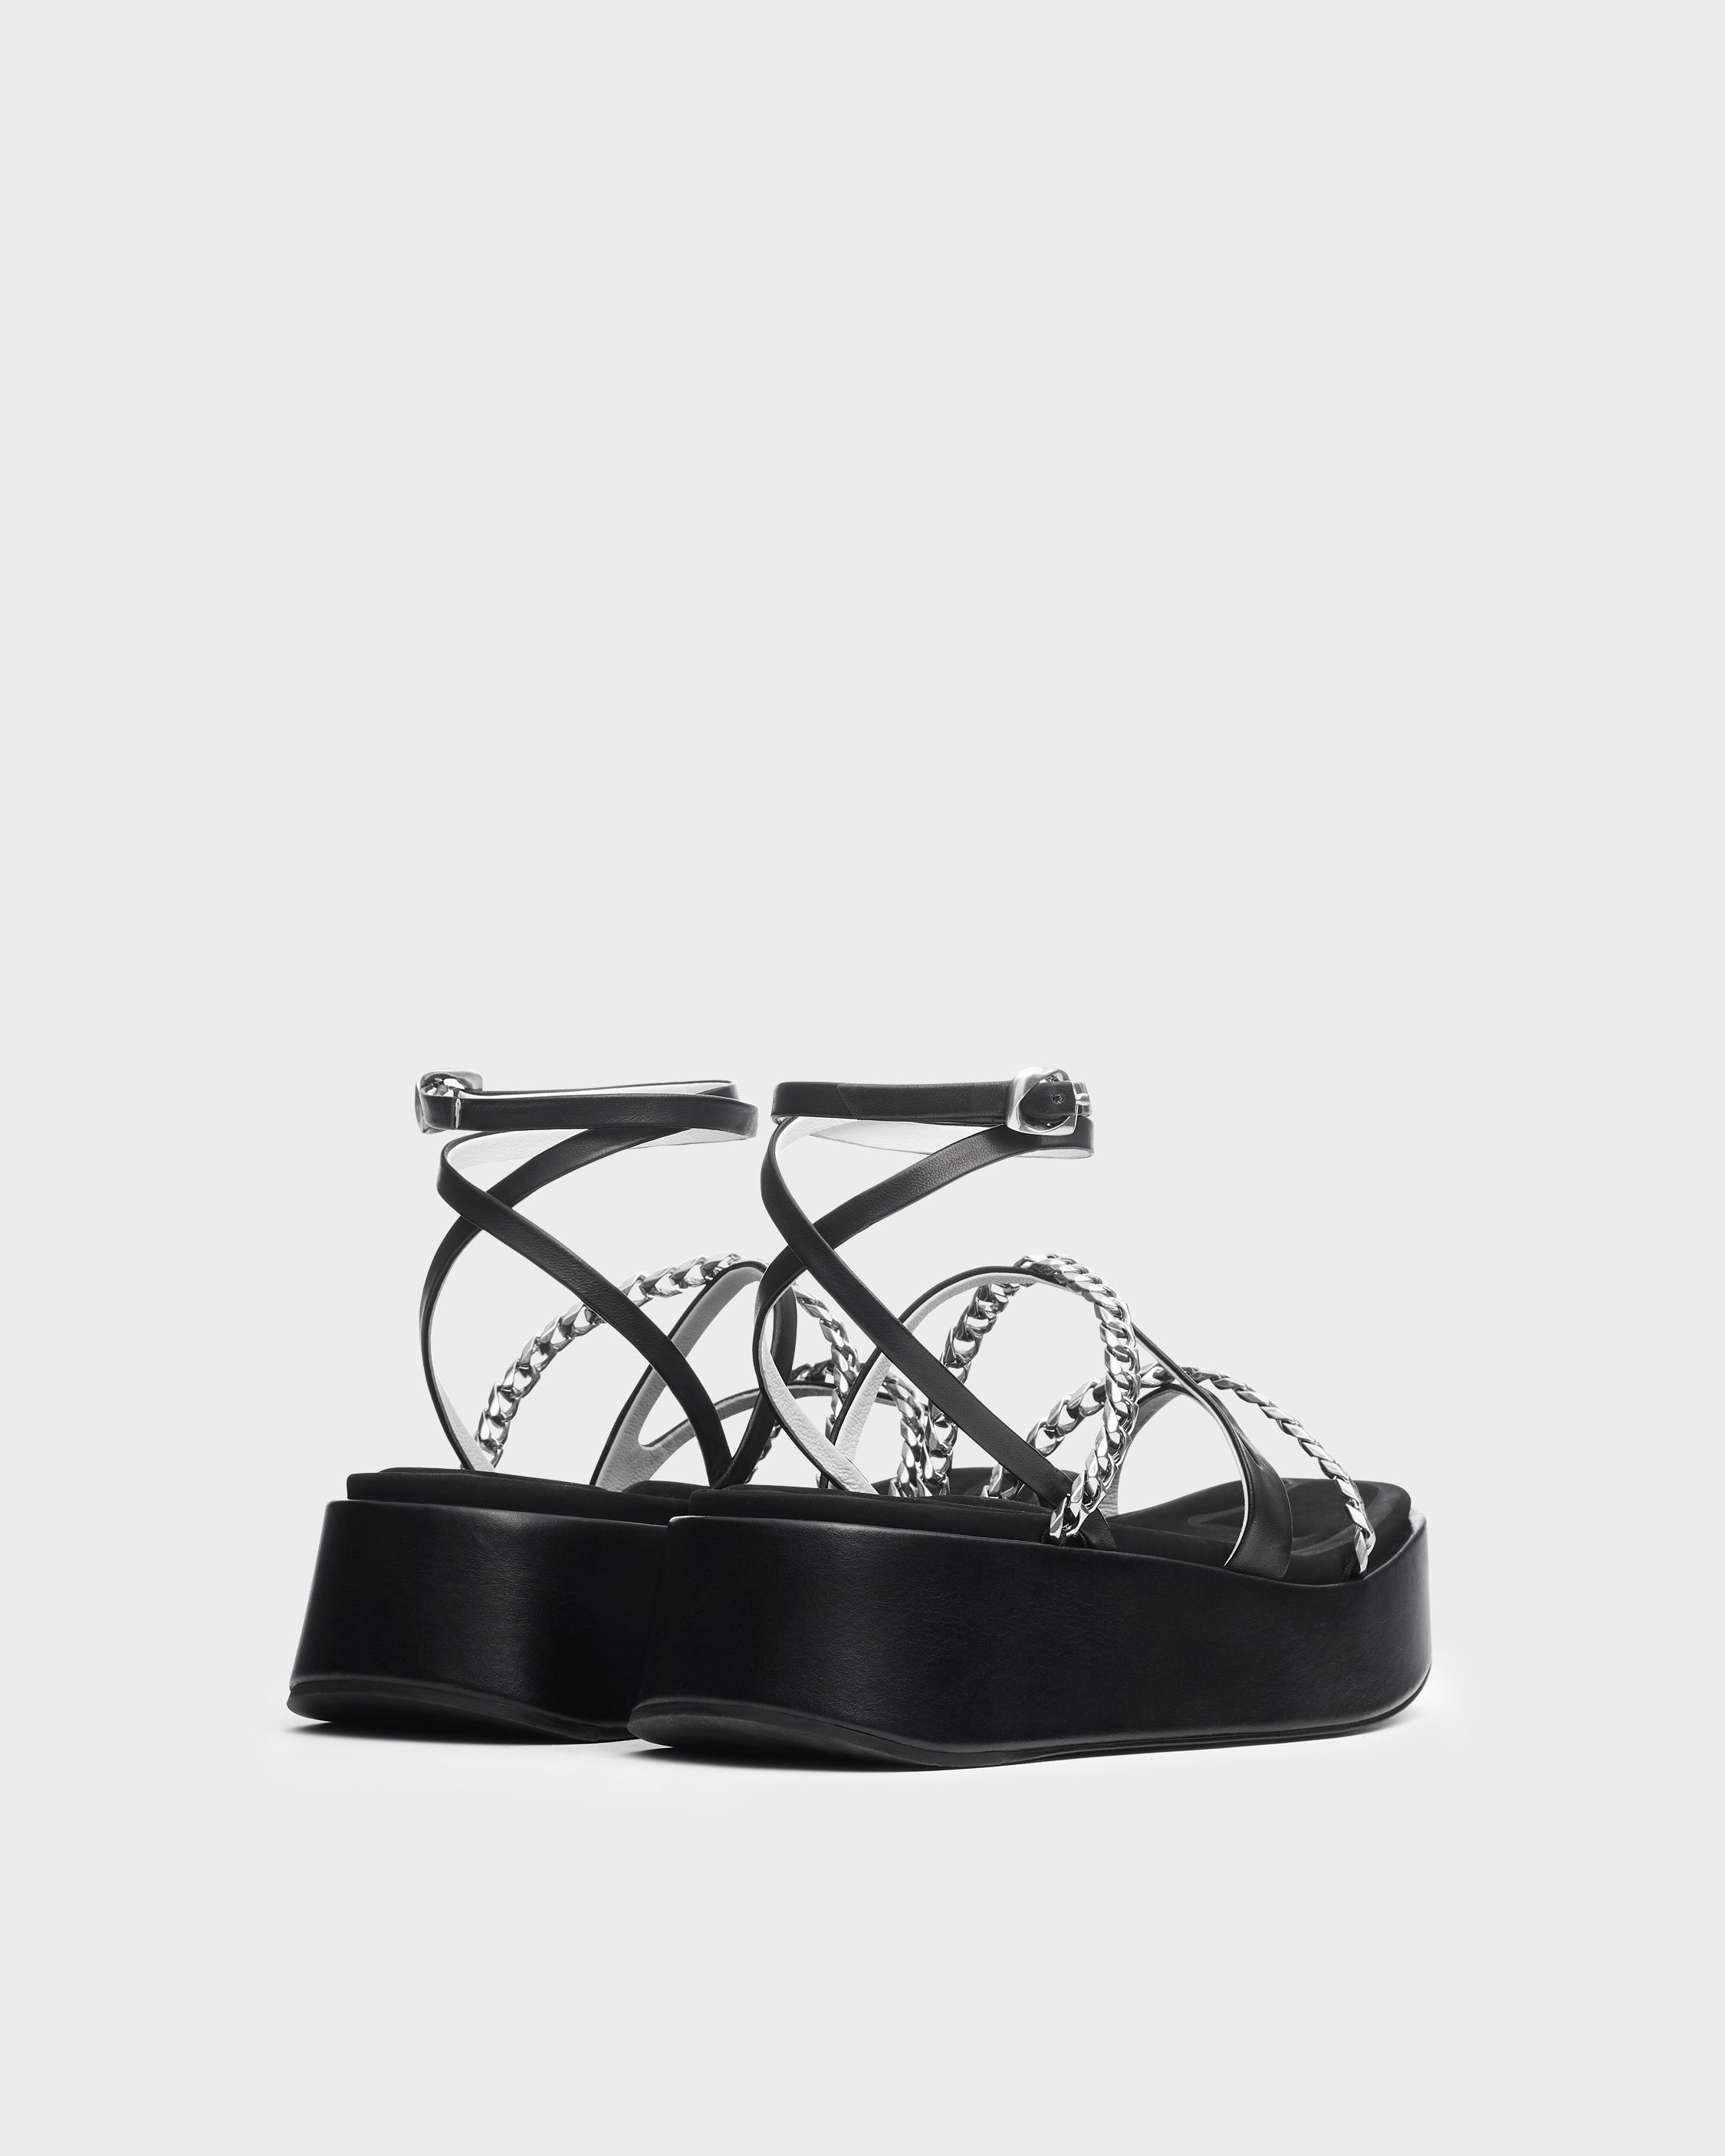 Logan Sandal - Leather
Platform Sandal - 3